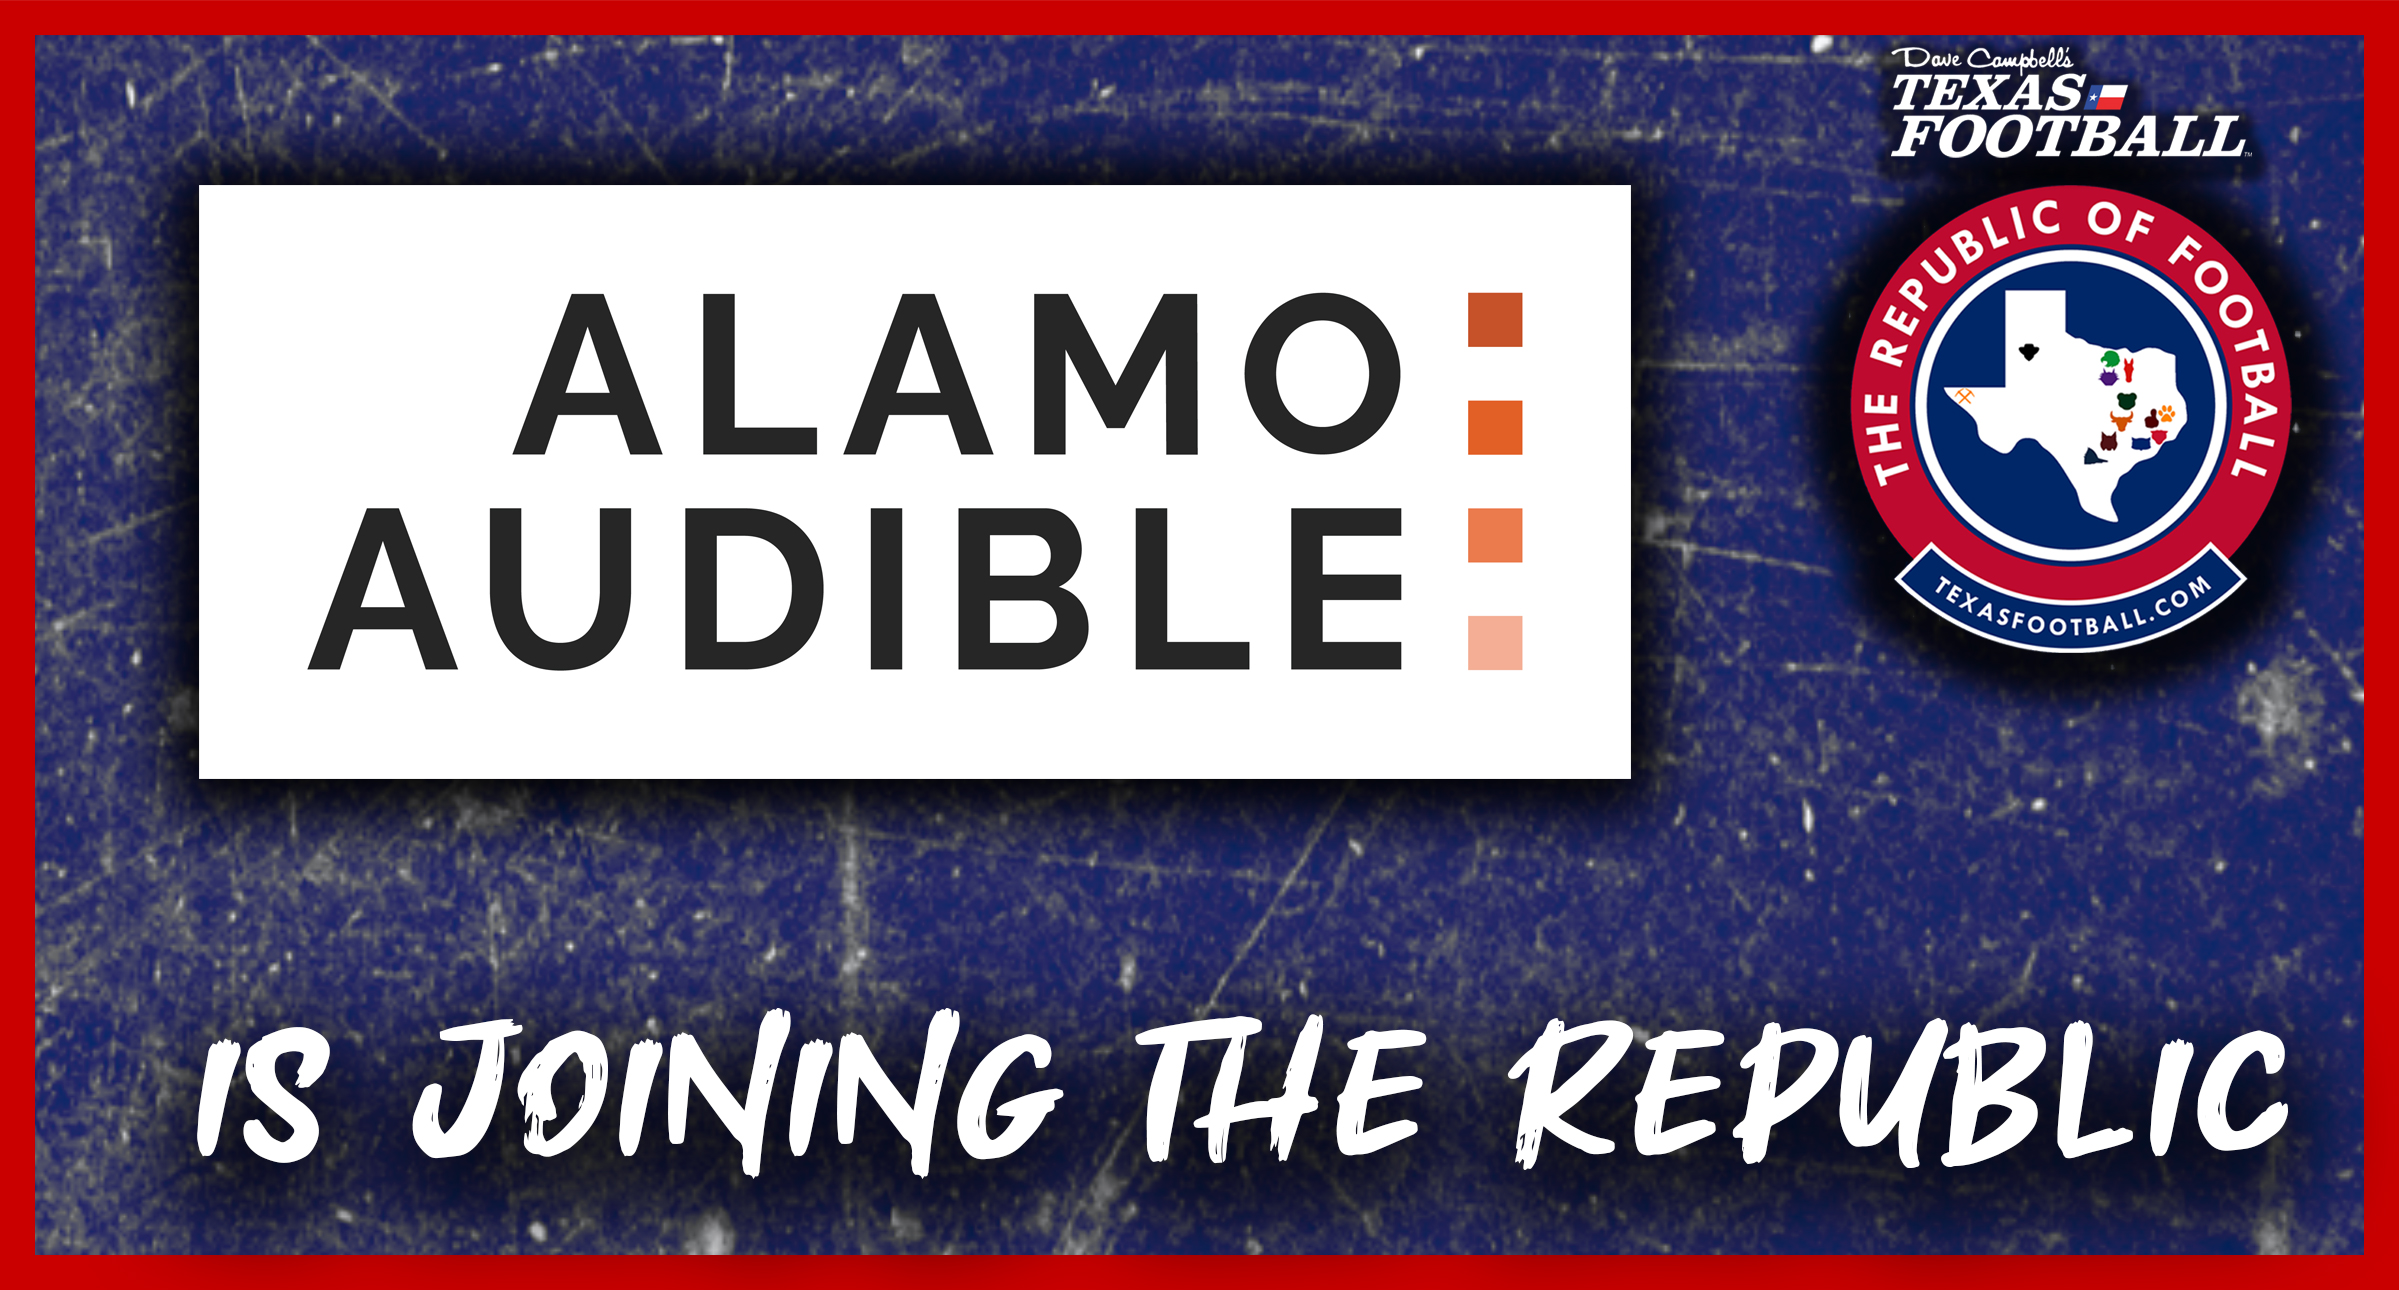 Alamo Audible ROF Republic of Football